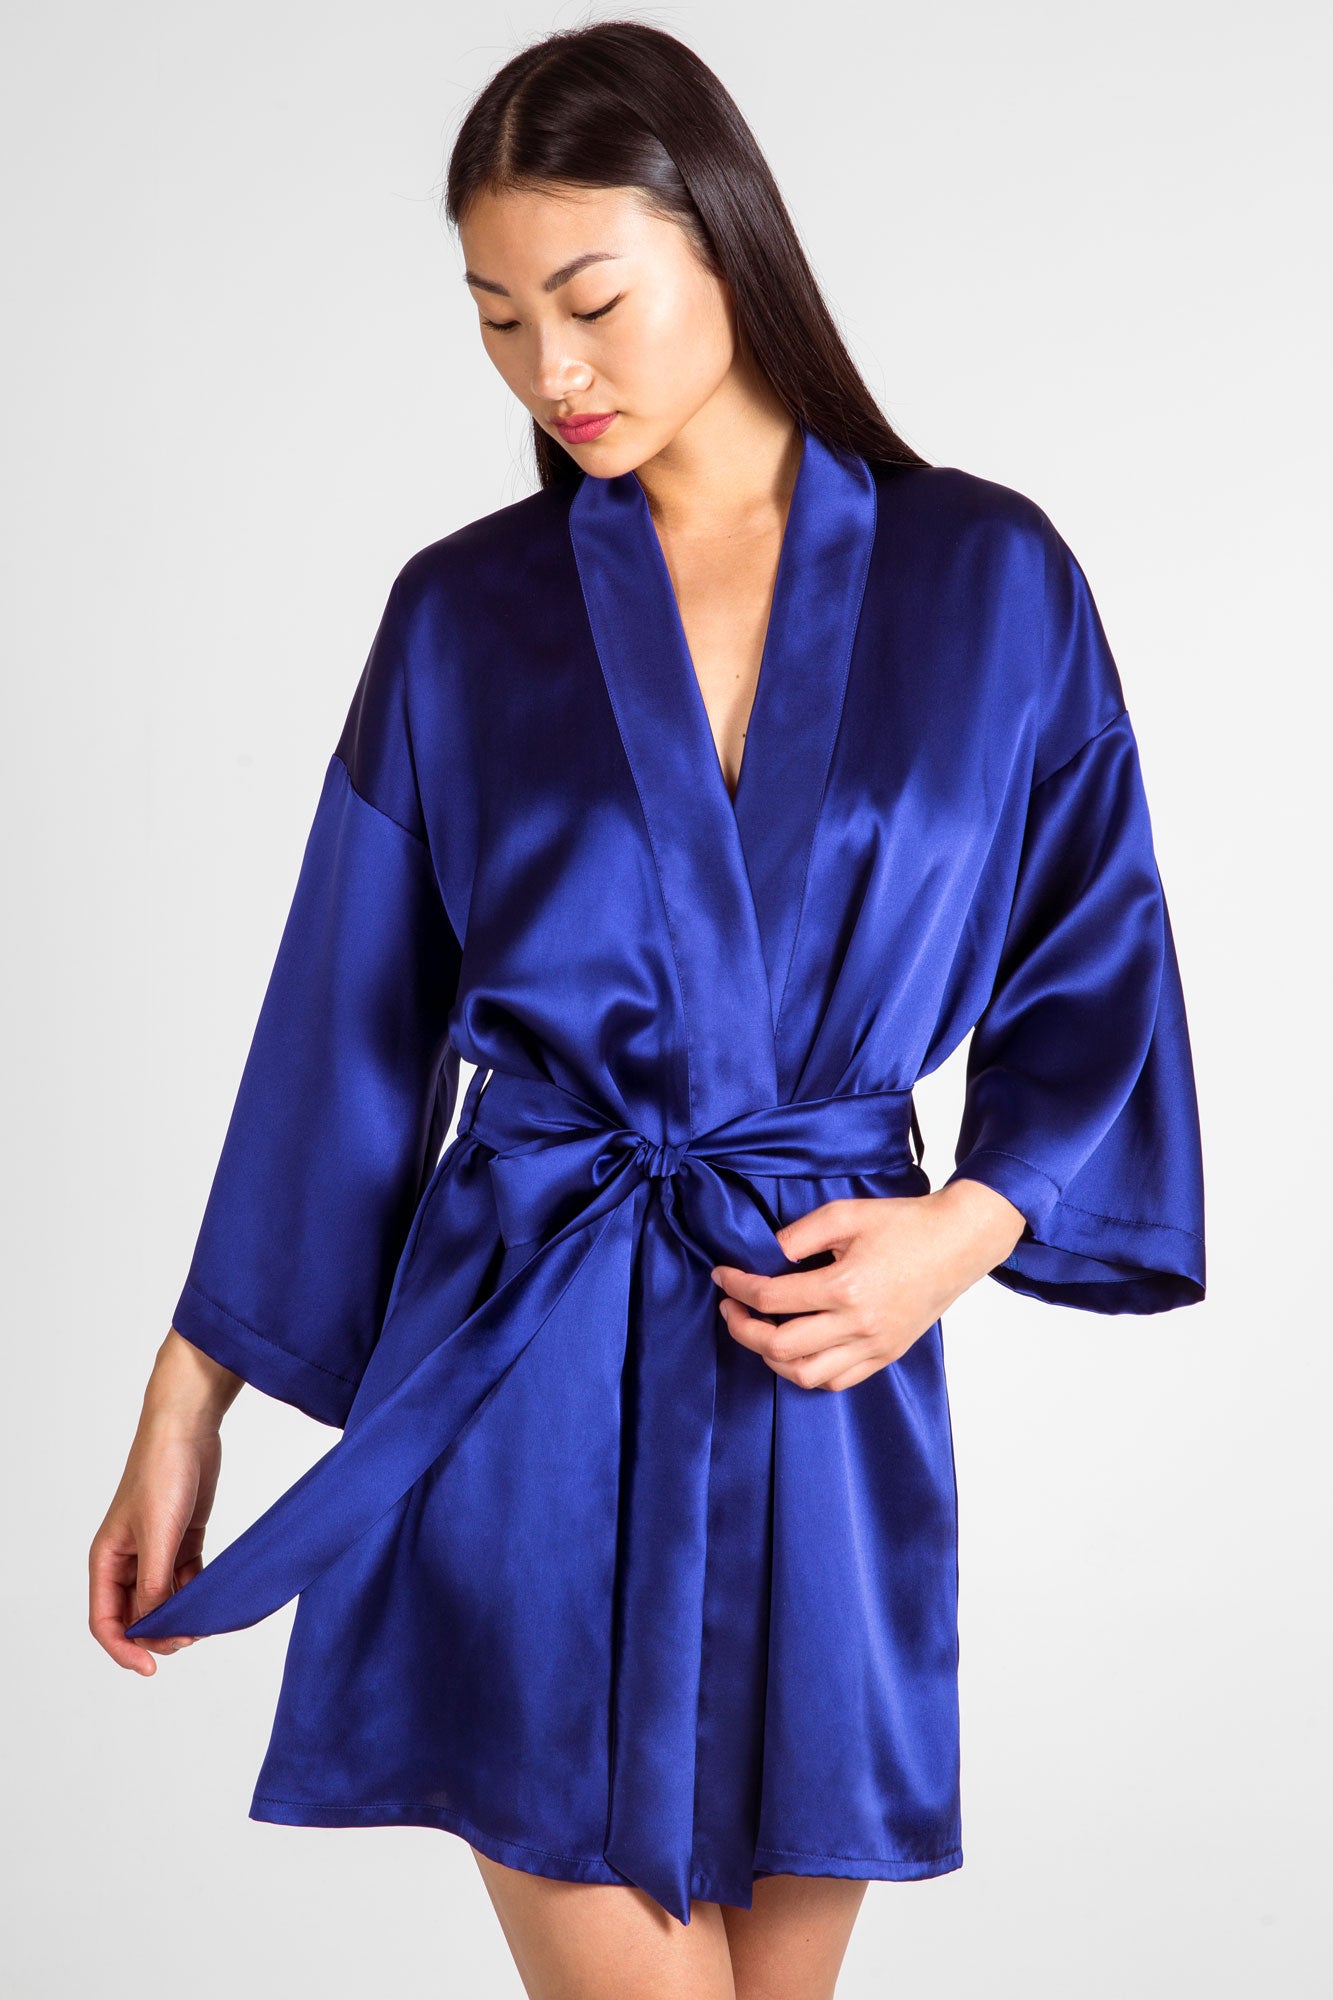 Julianna silk robe  100% silk satin dressing gowns